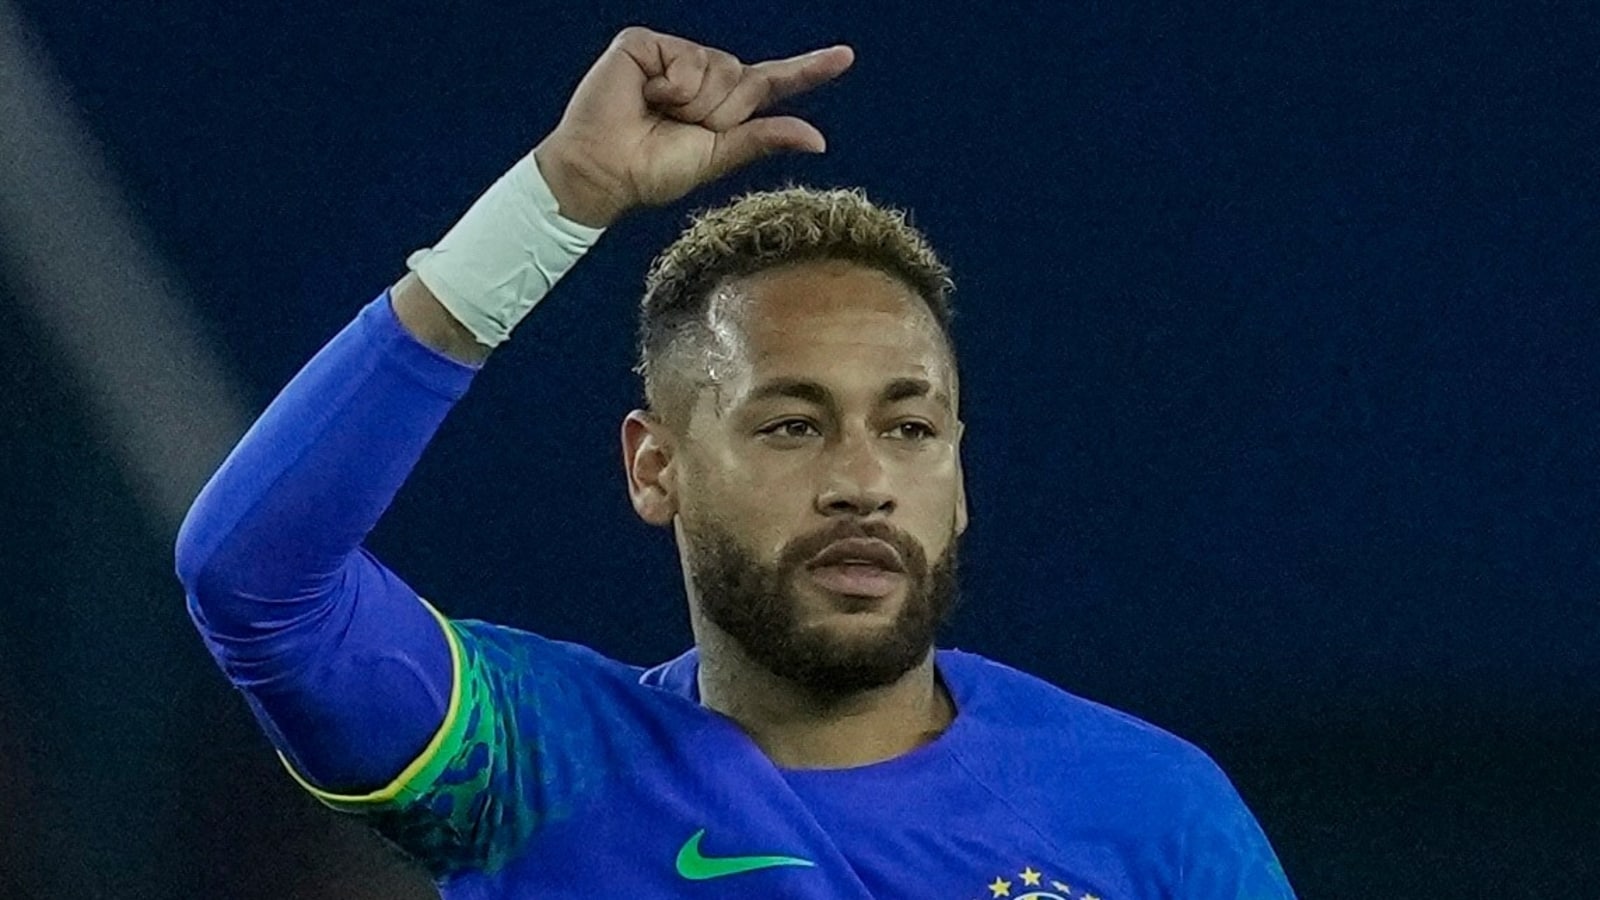 I can't guarantee that': Brazil's Neymar drops massive FIFA World Cup bombshell